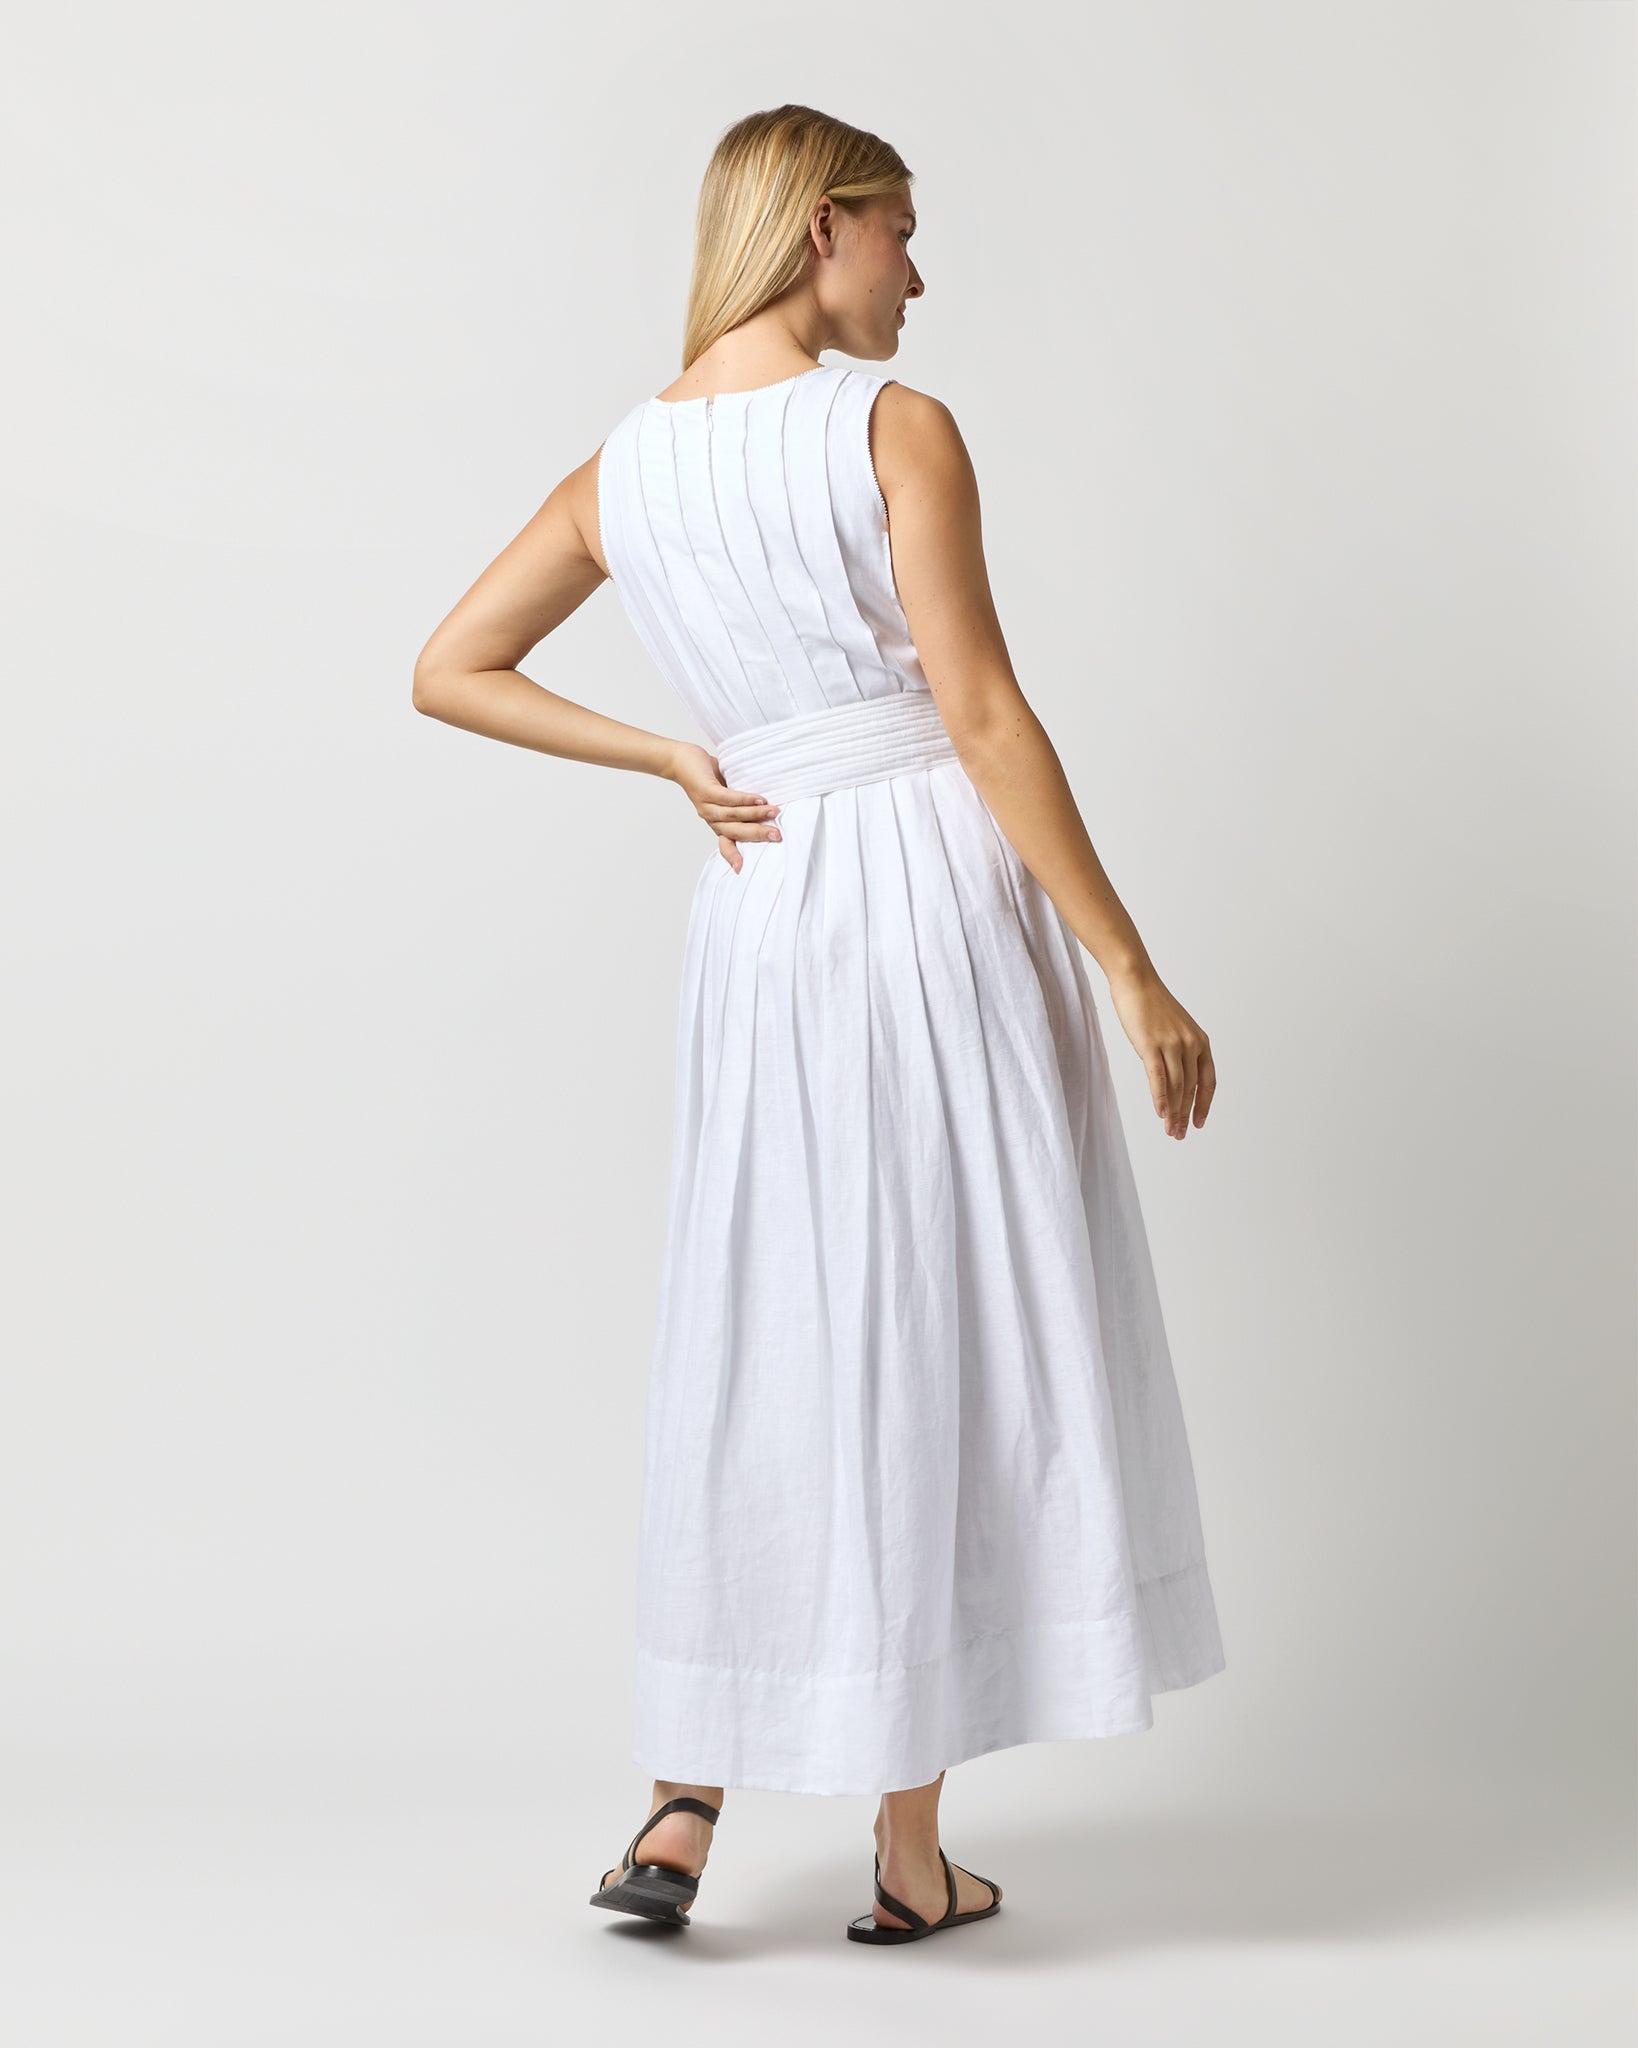 Pleated Jill Dress in White Sahara Linen